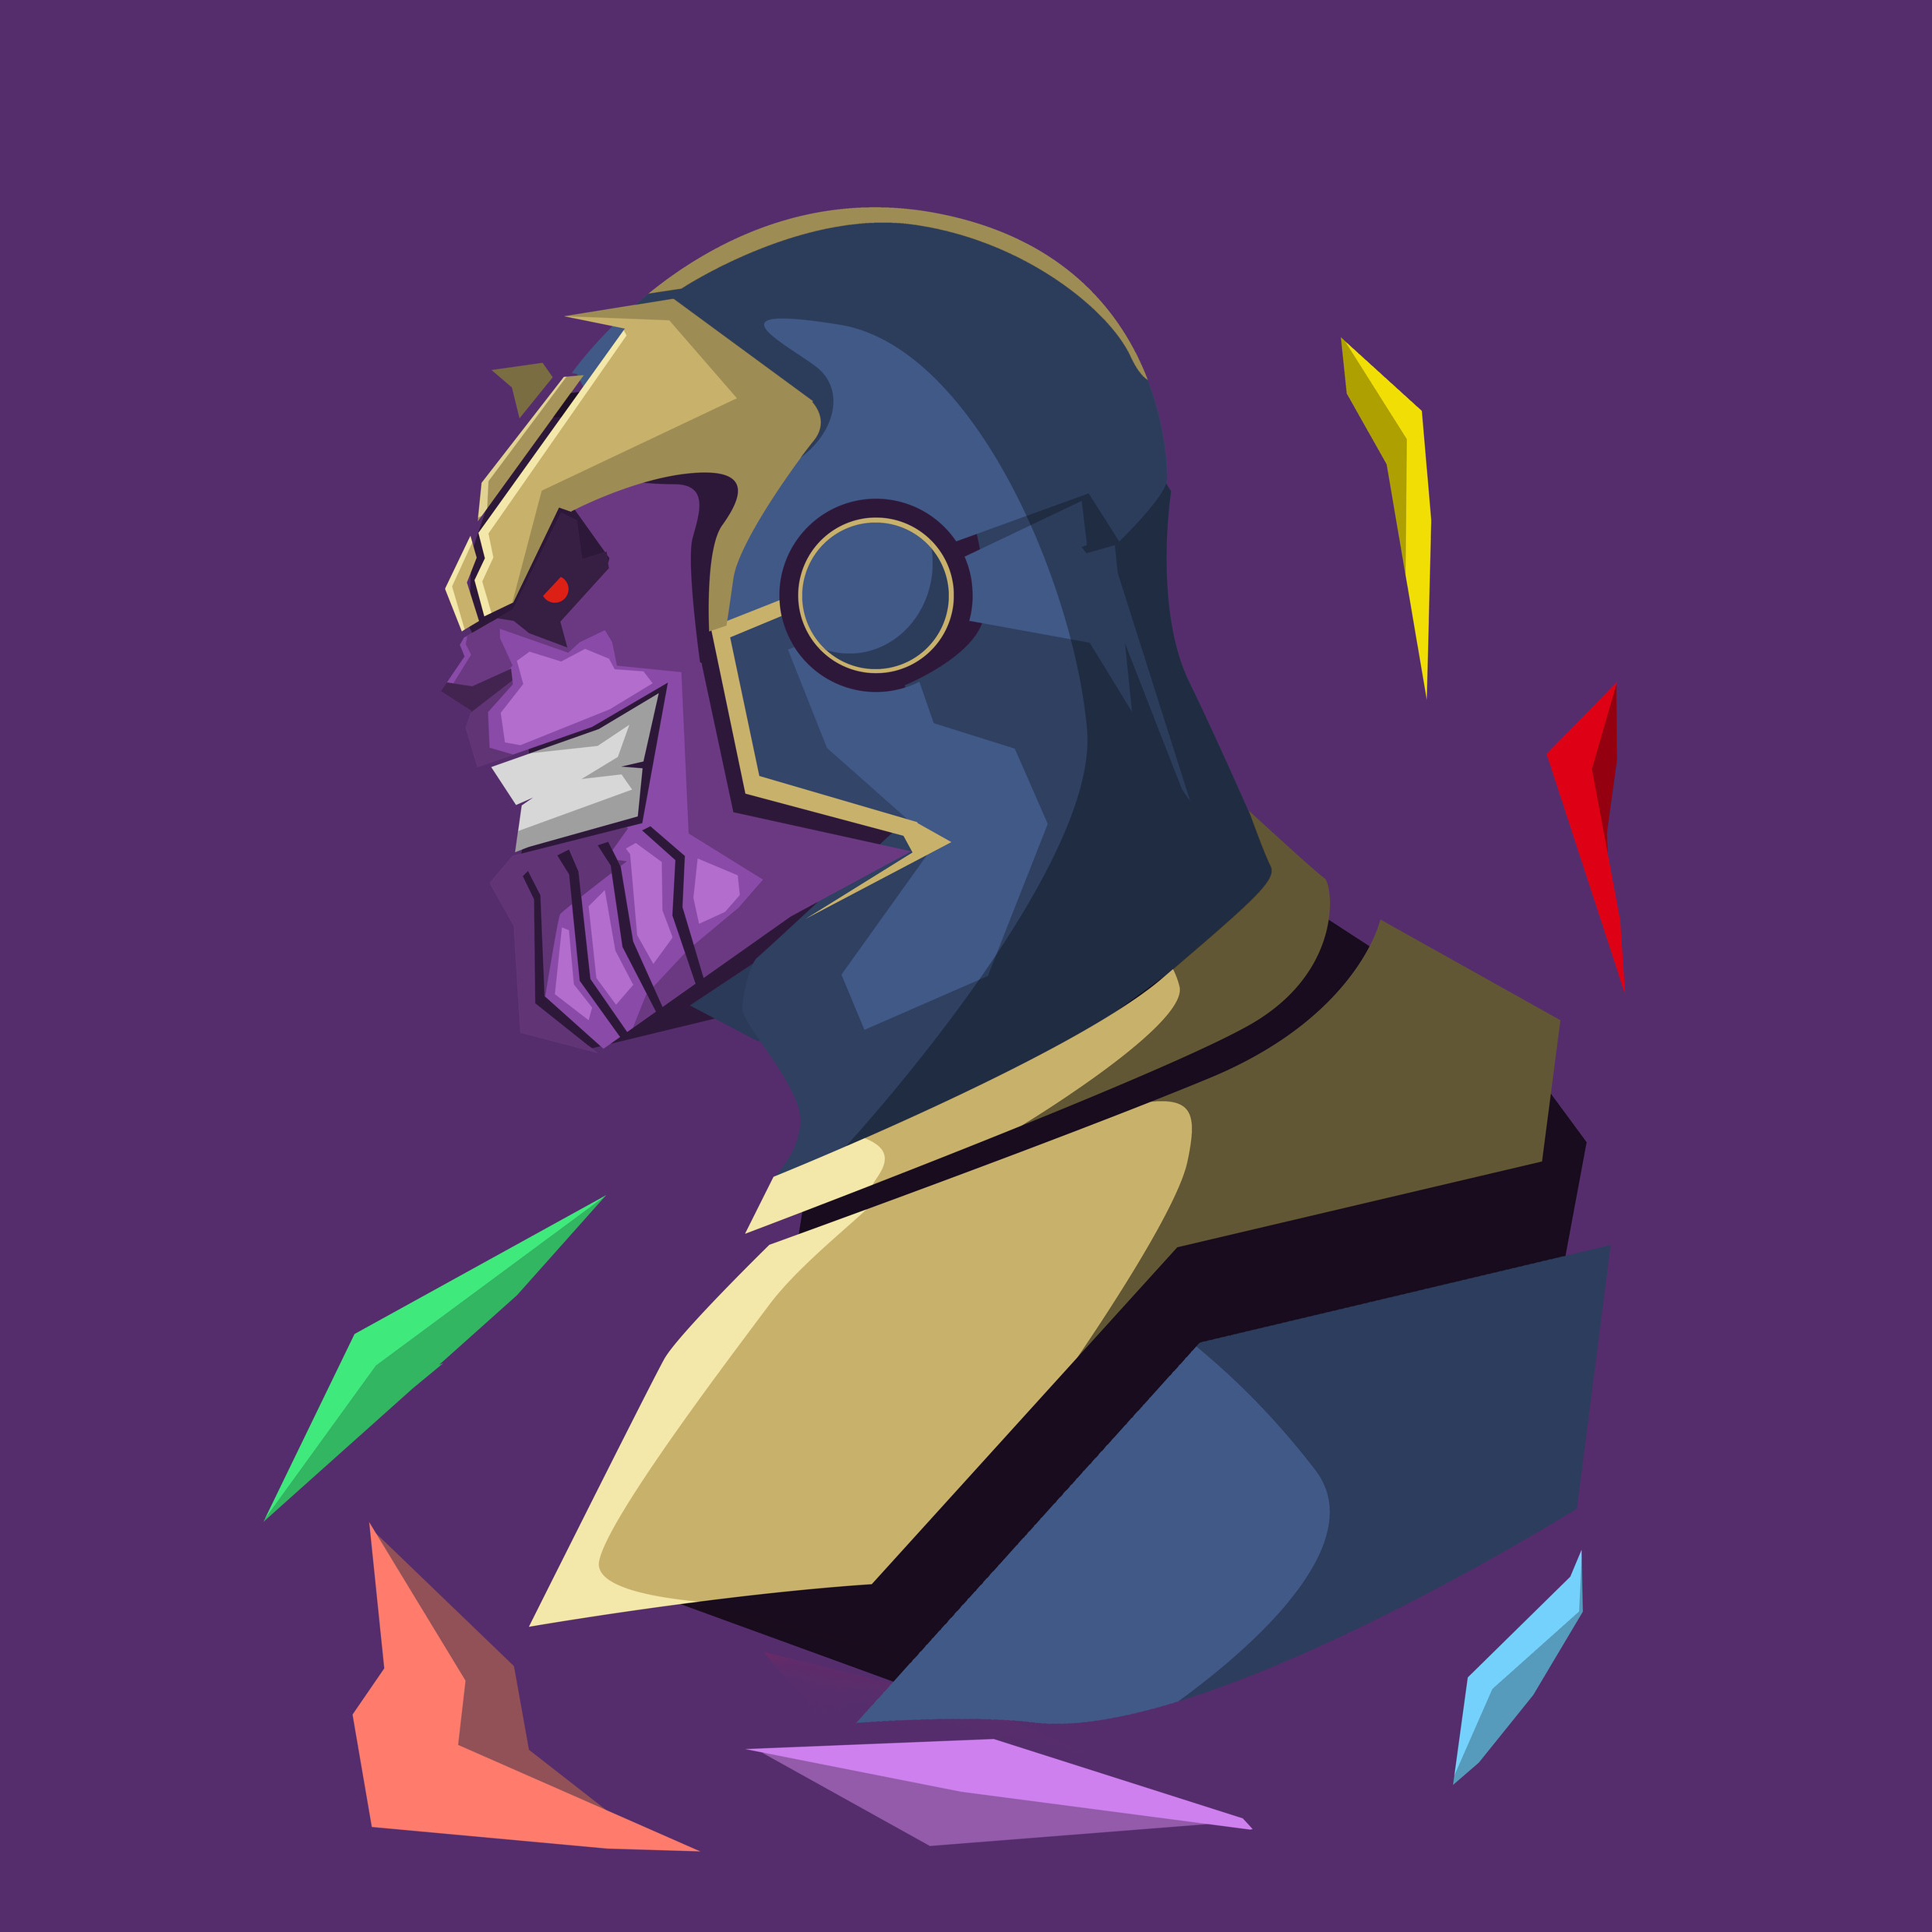 Thanos Pfp by BossLogic